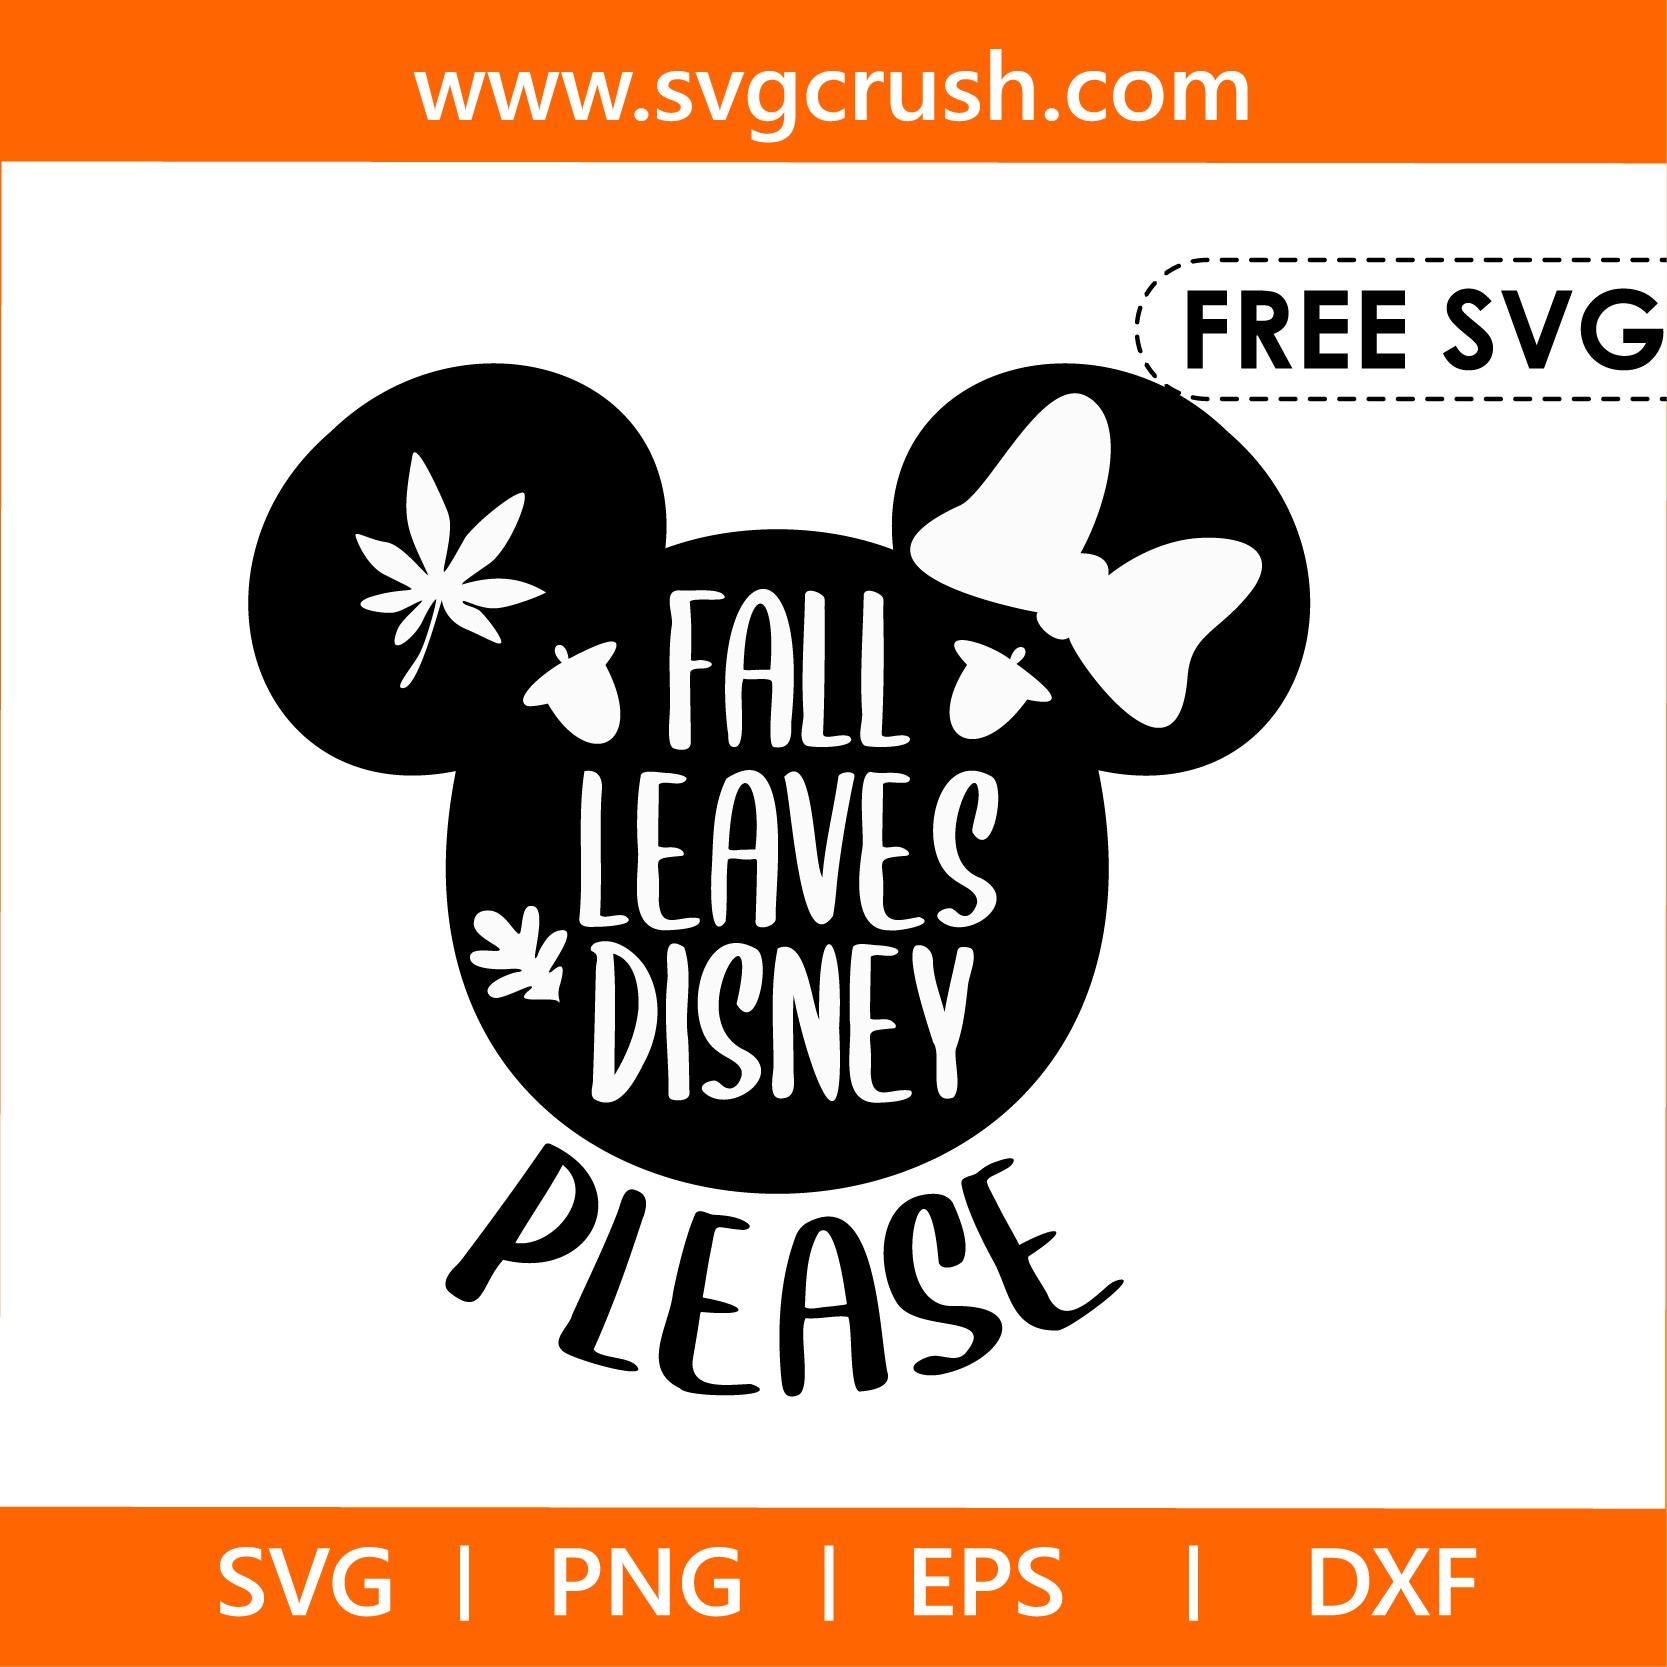 free fall-leaves-disney-please-006 svg